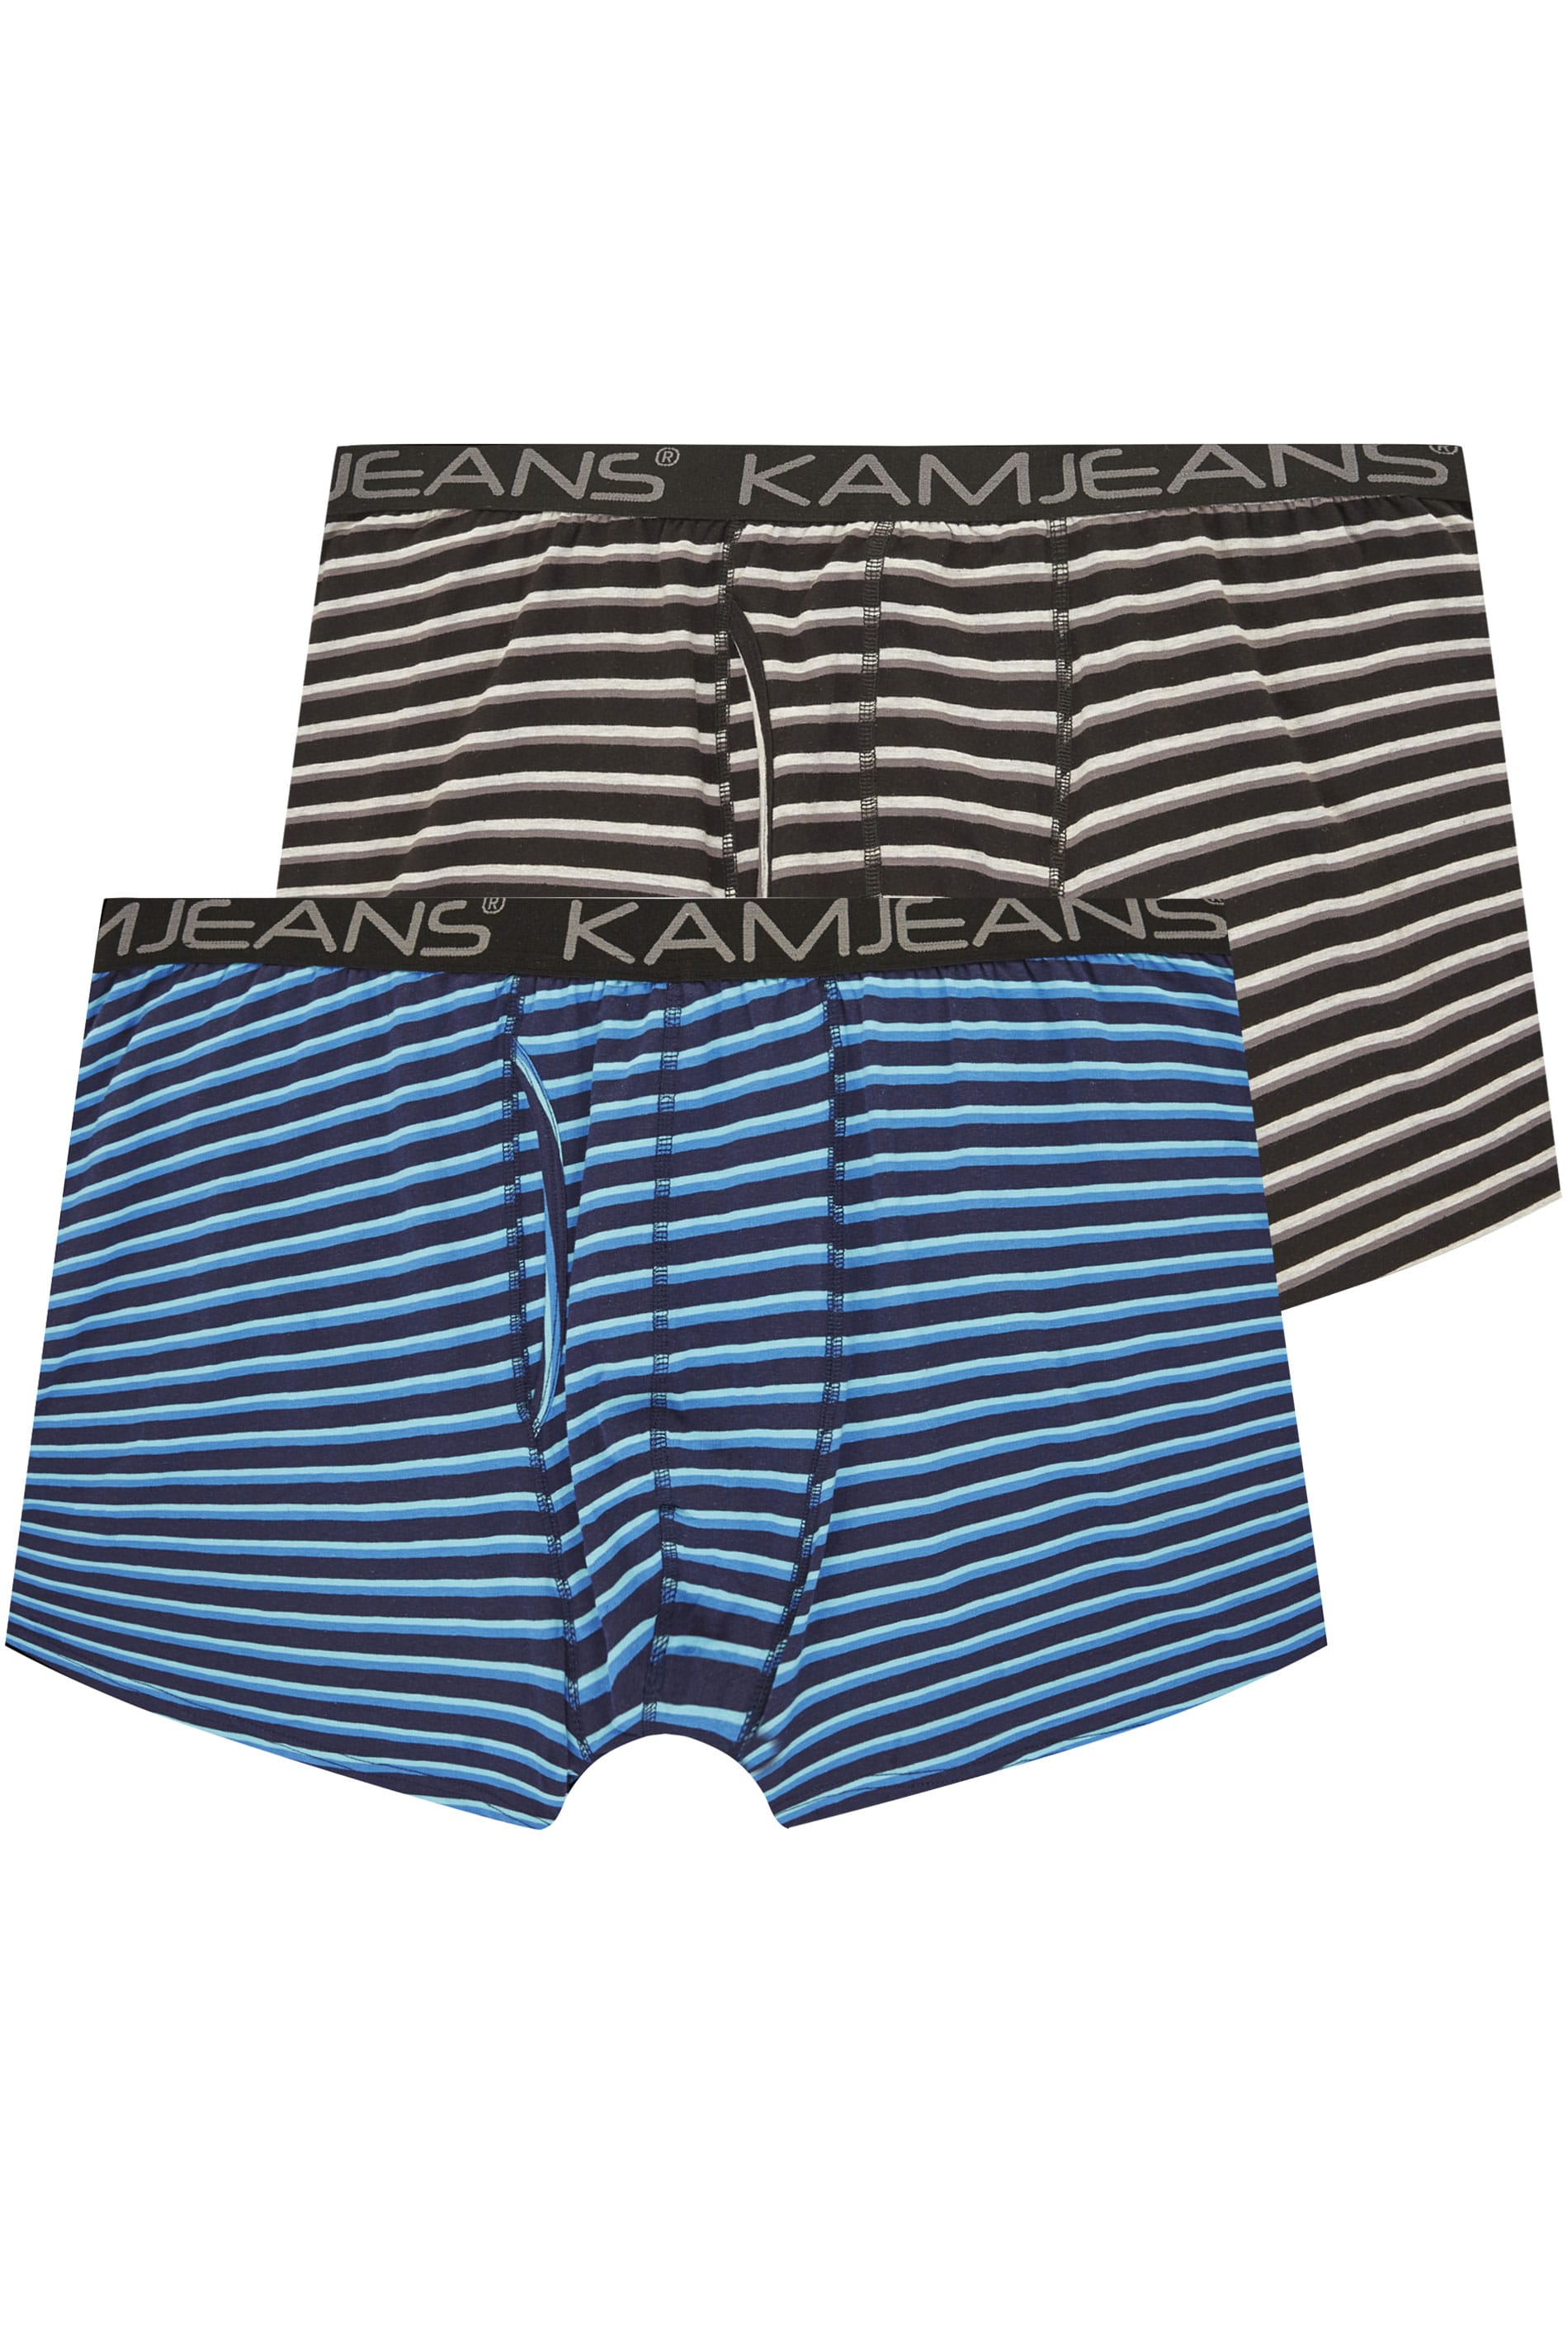 KAM 2 PACK Black & Blue Striped Jersey Boxers_6234.jpg